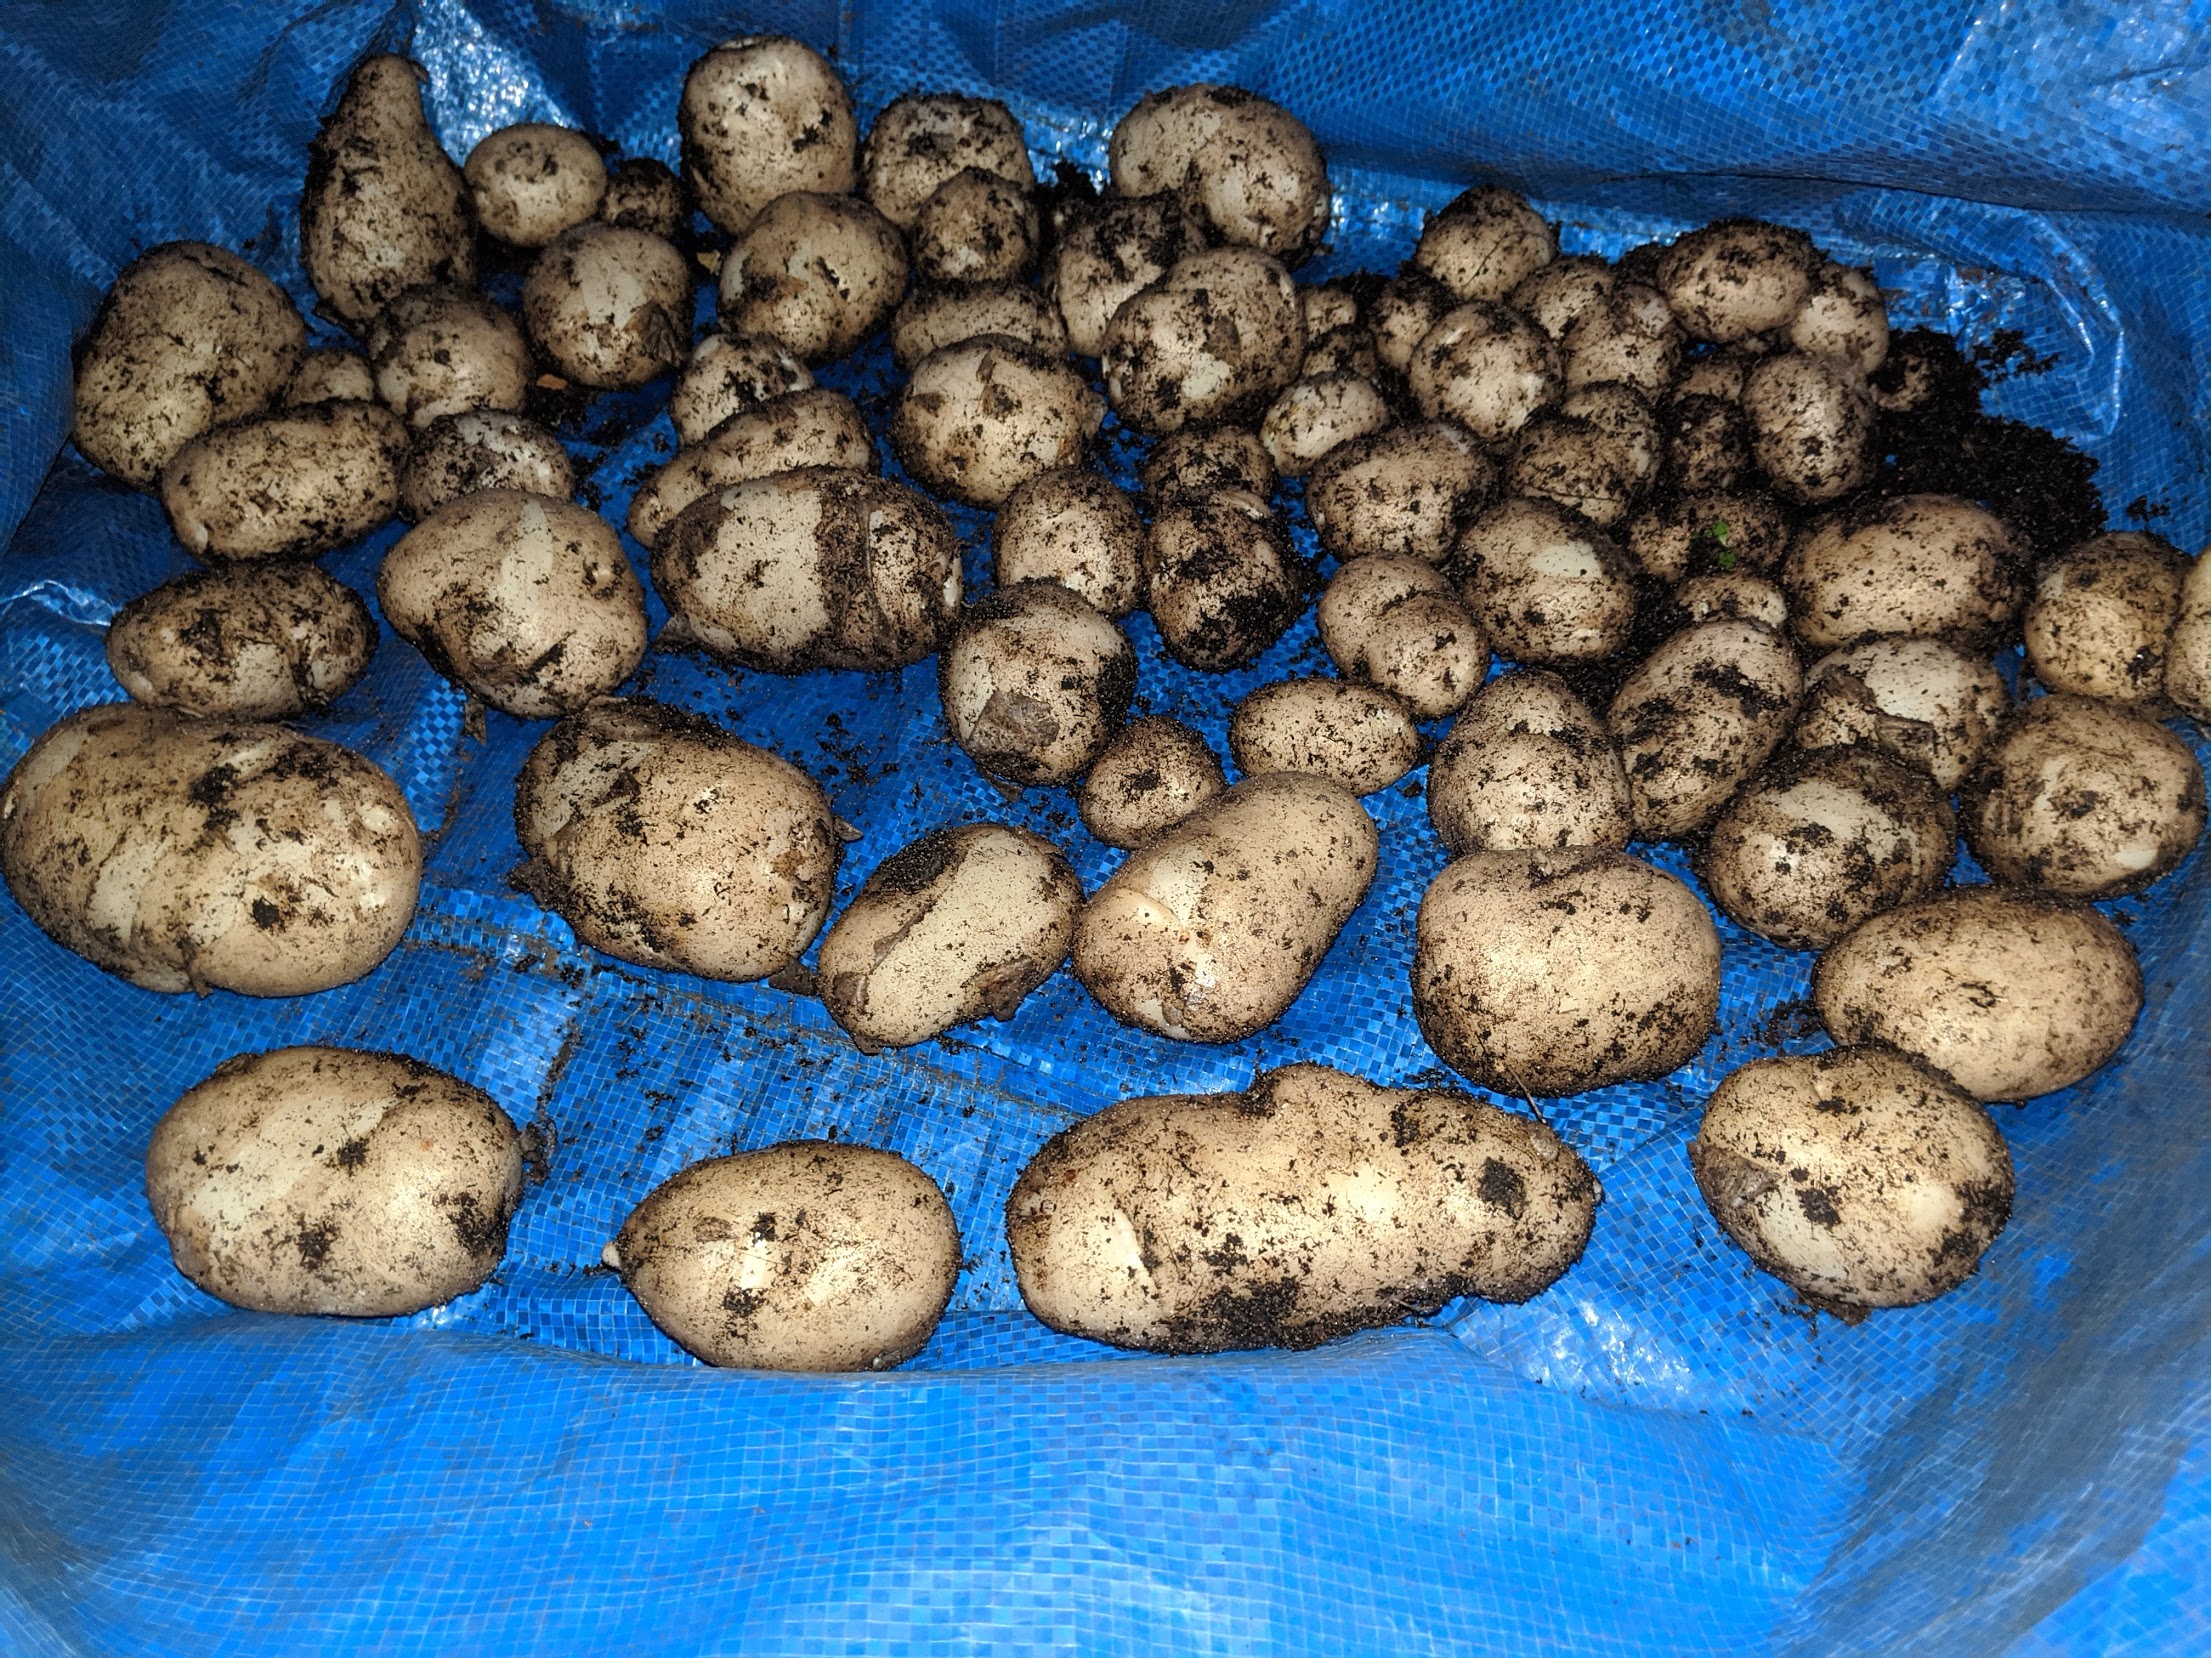 Potato yield in a bag